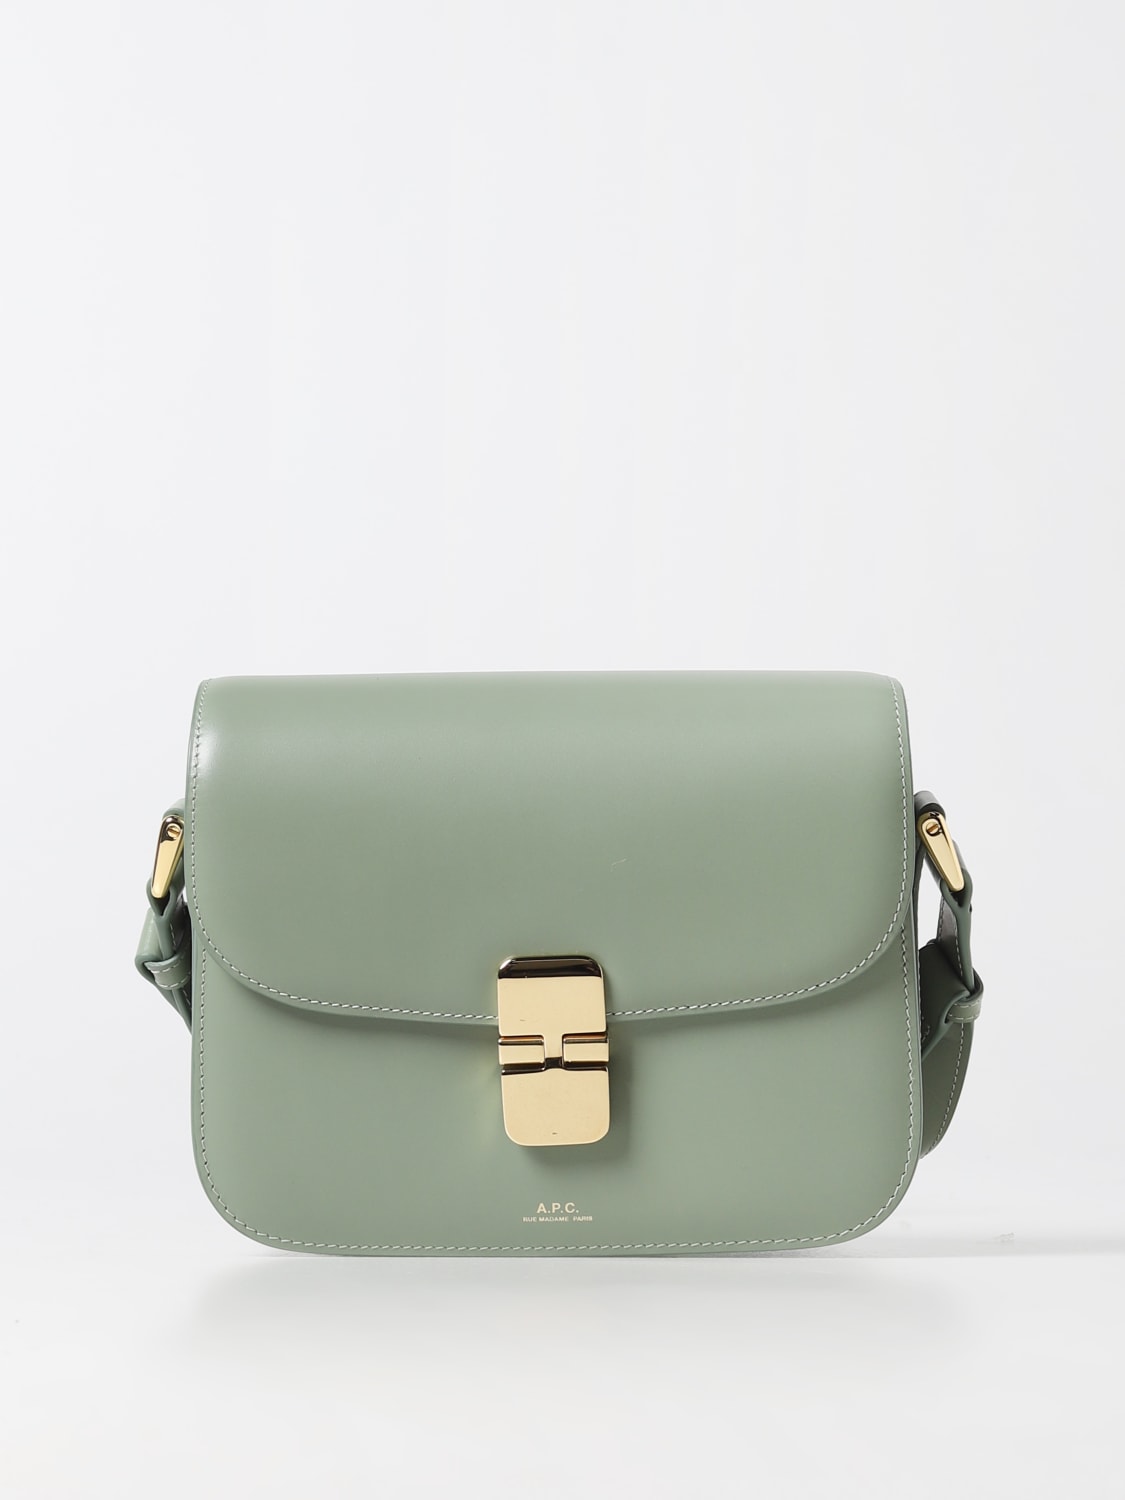 A.P.C. Green Small Grace Bag